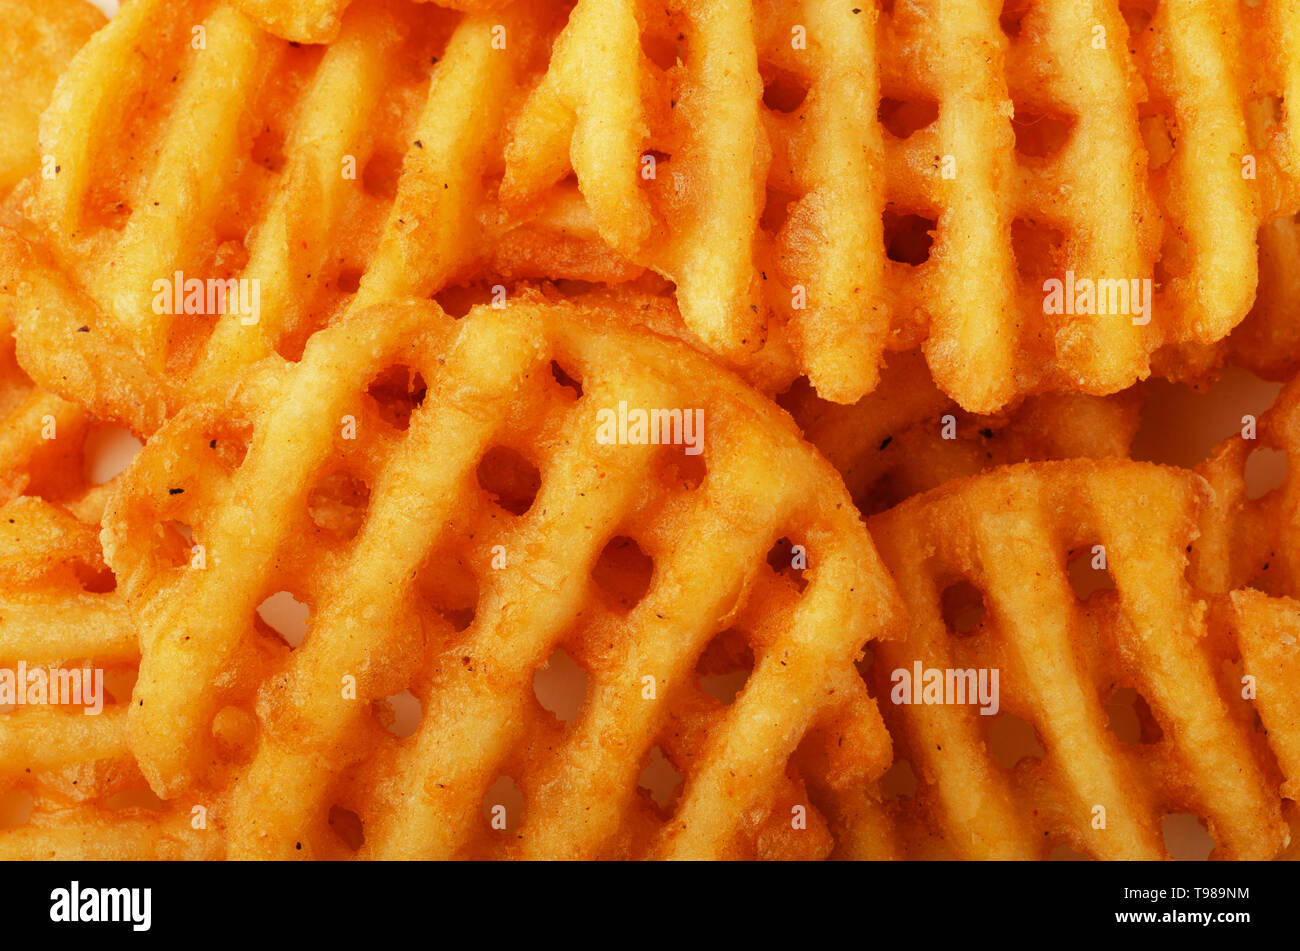 Crispy potato waffles fries, wavy, crinkle cut, criss cross cries as background Stock Photo